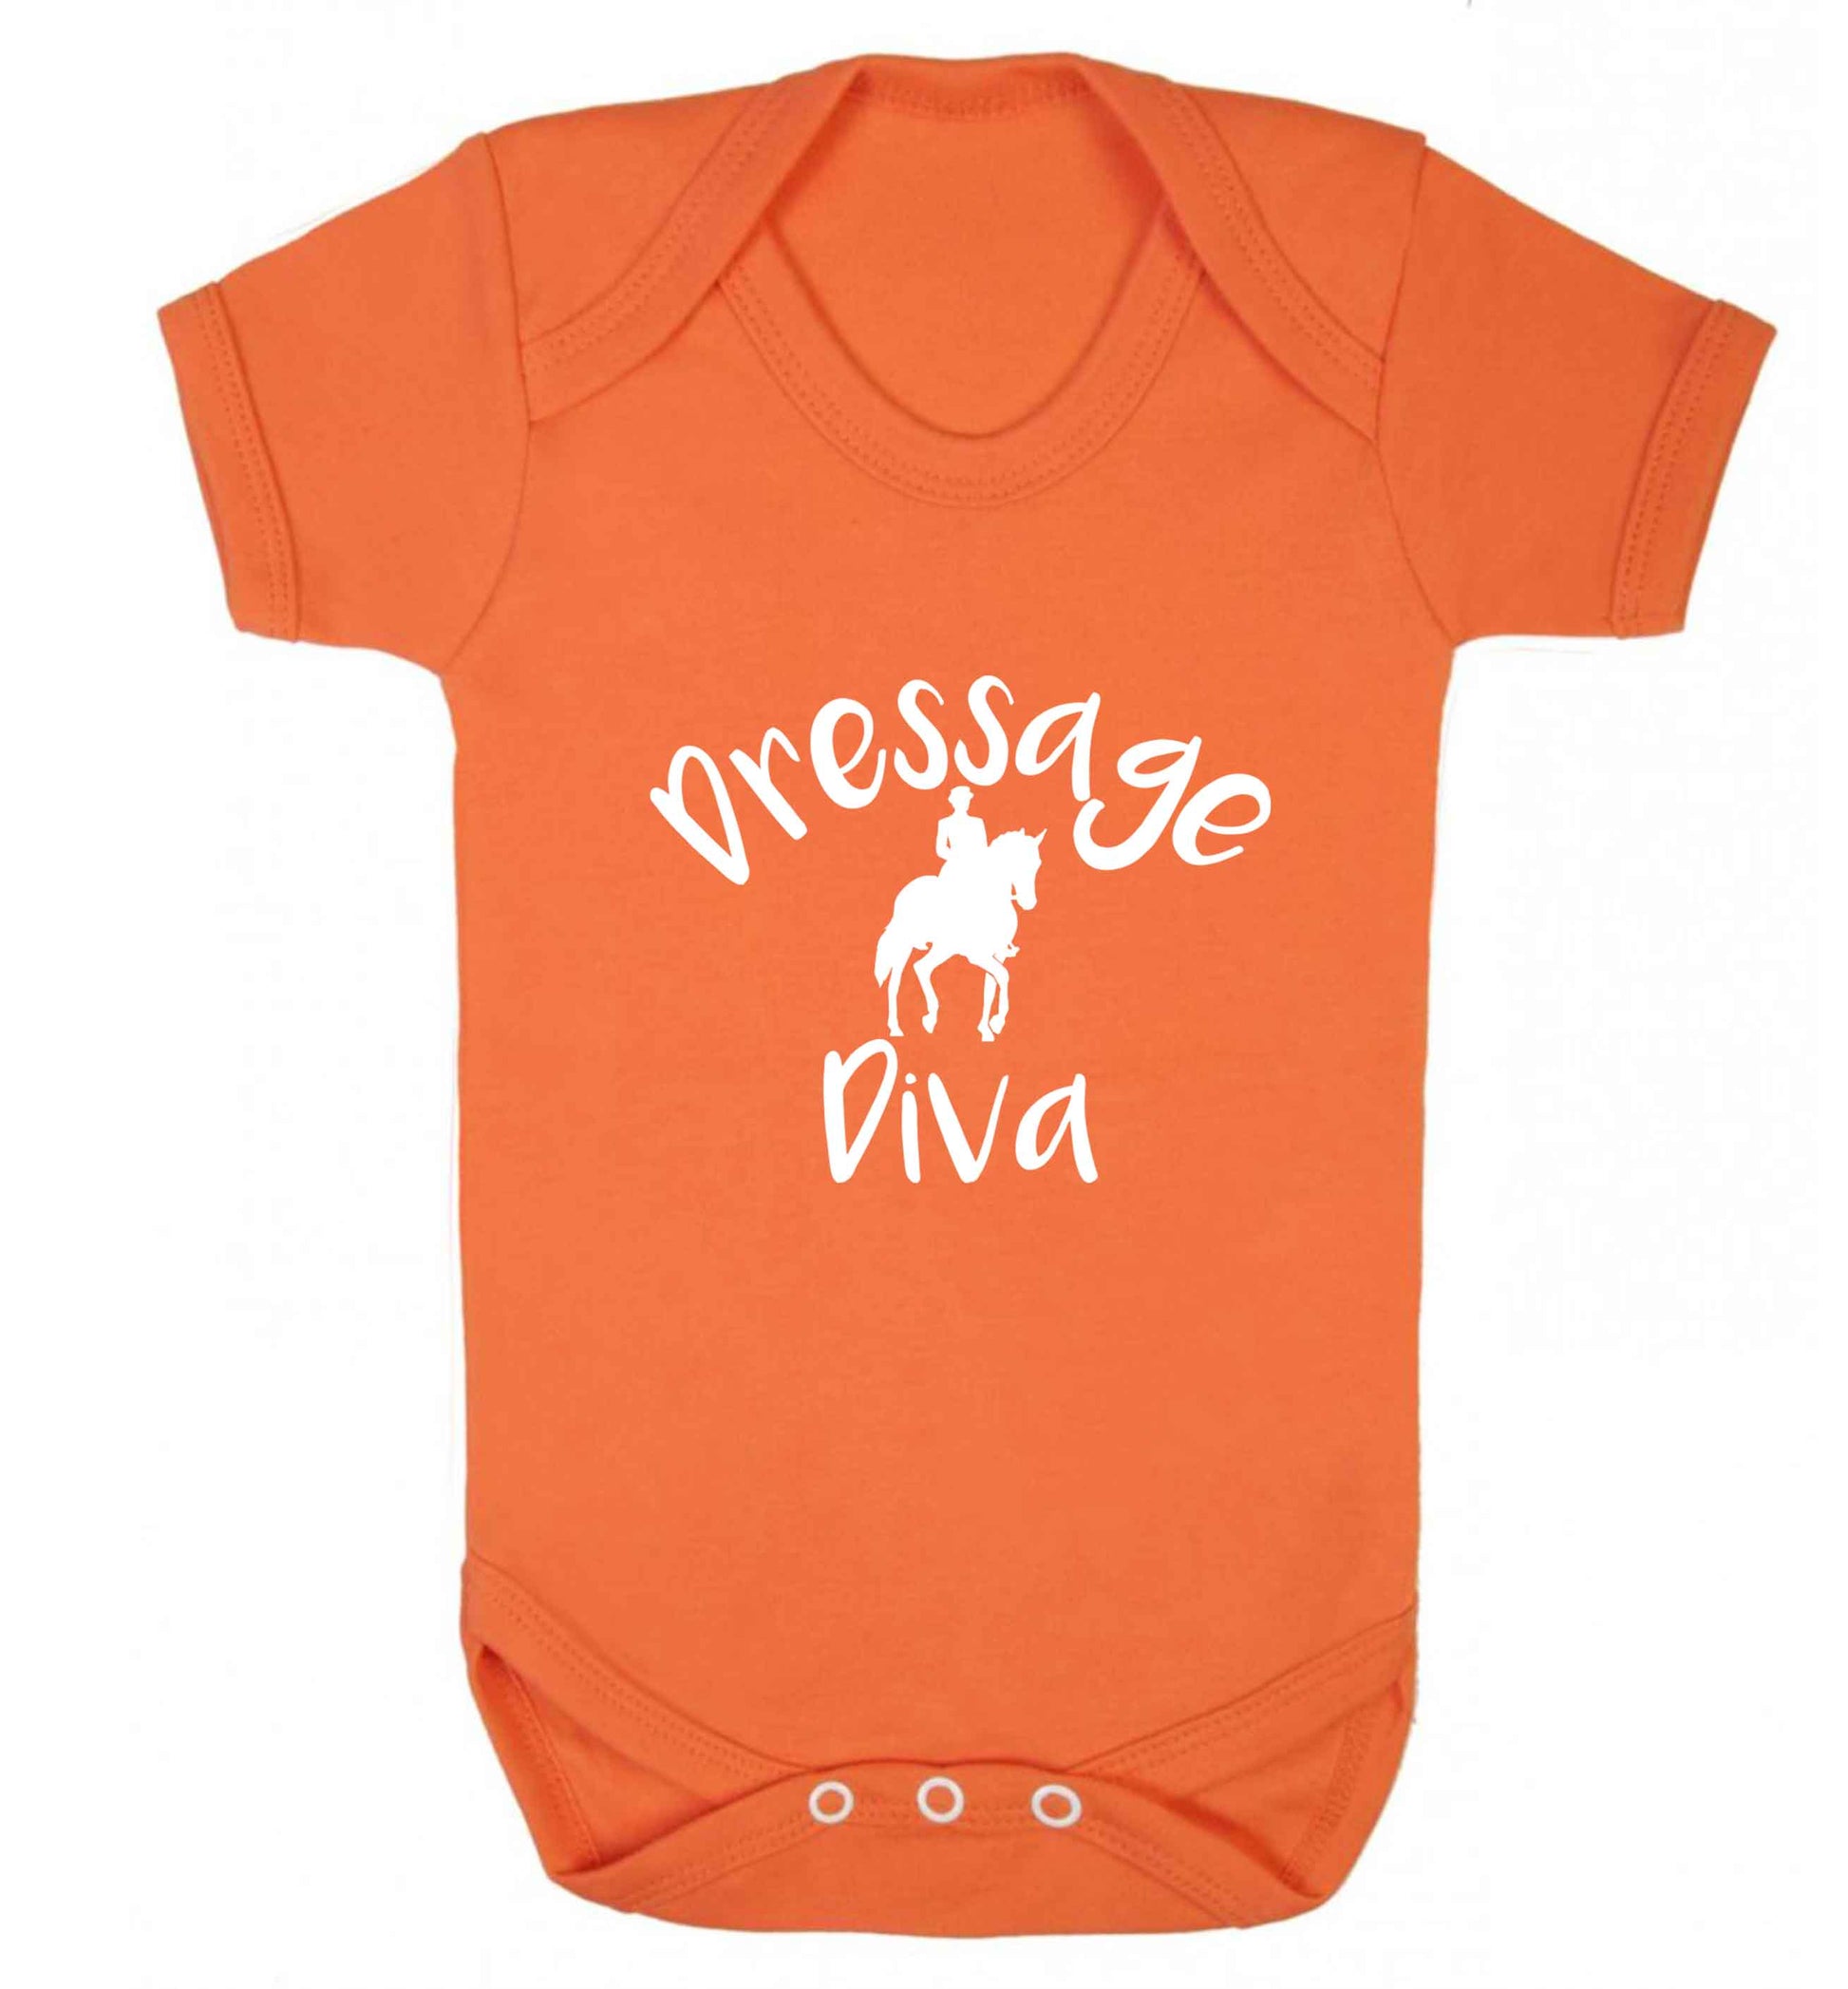 Dressage diva baby vest orange 18-24 months